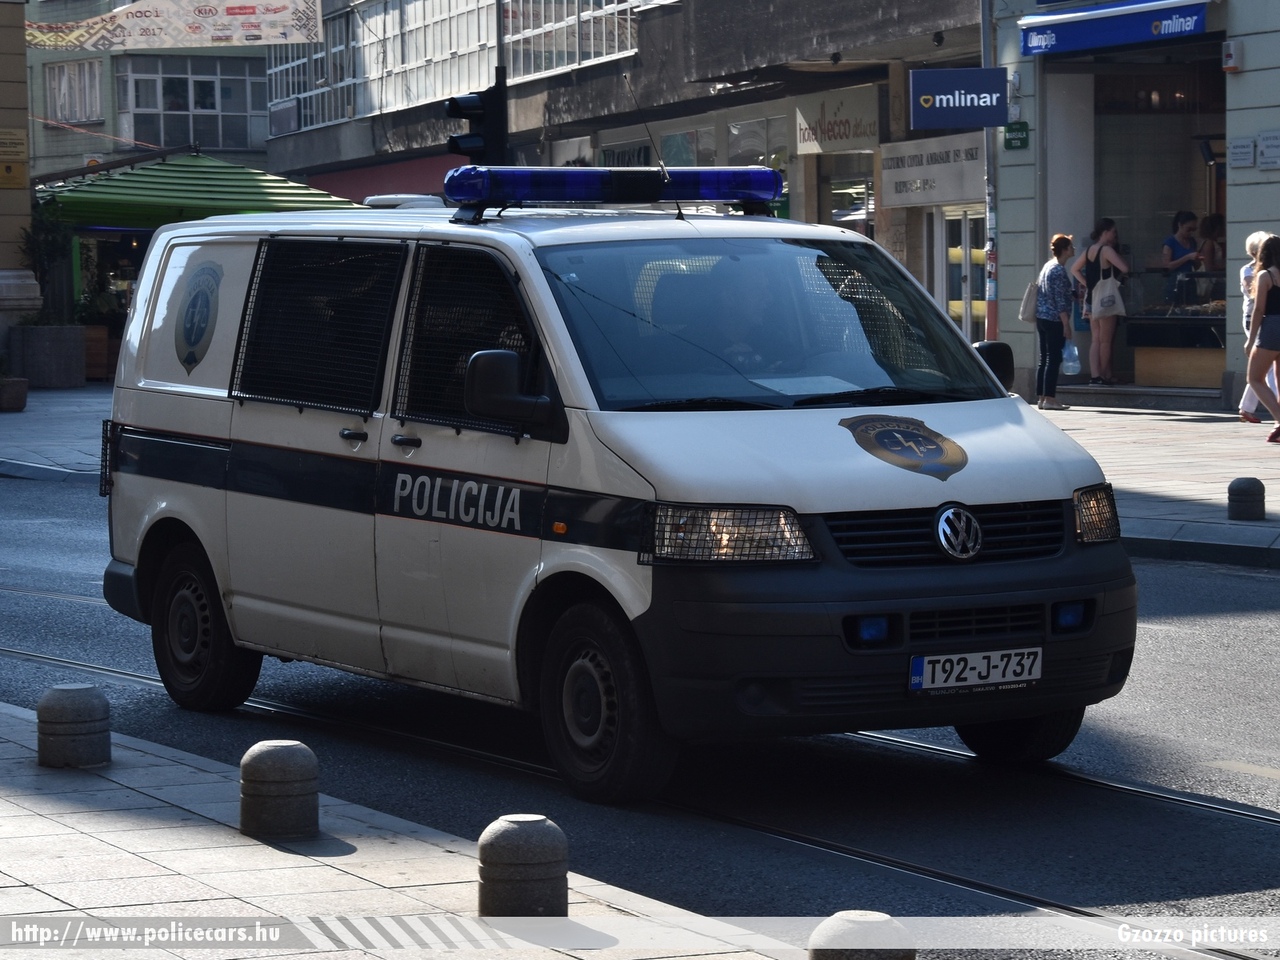 Volkswagen Transporter T5, fotó: Gzozzo pictures
Keywords: Bosznia-Hercegovina rendőr rendőrautó rendőrség bosnia bosnia-herzegovina police policecar